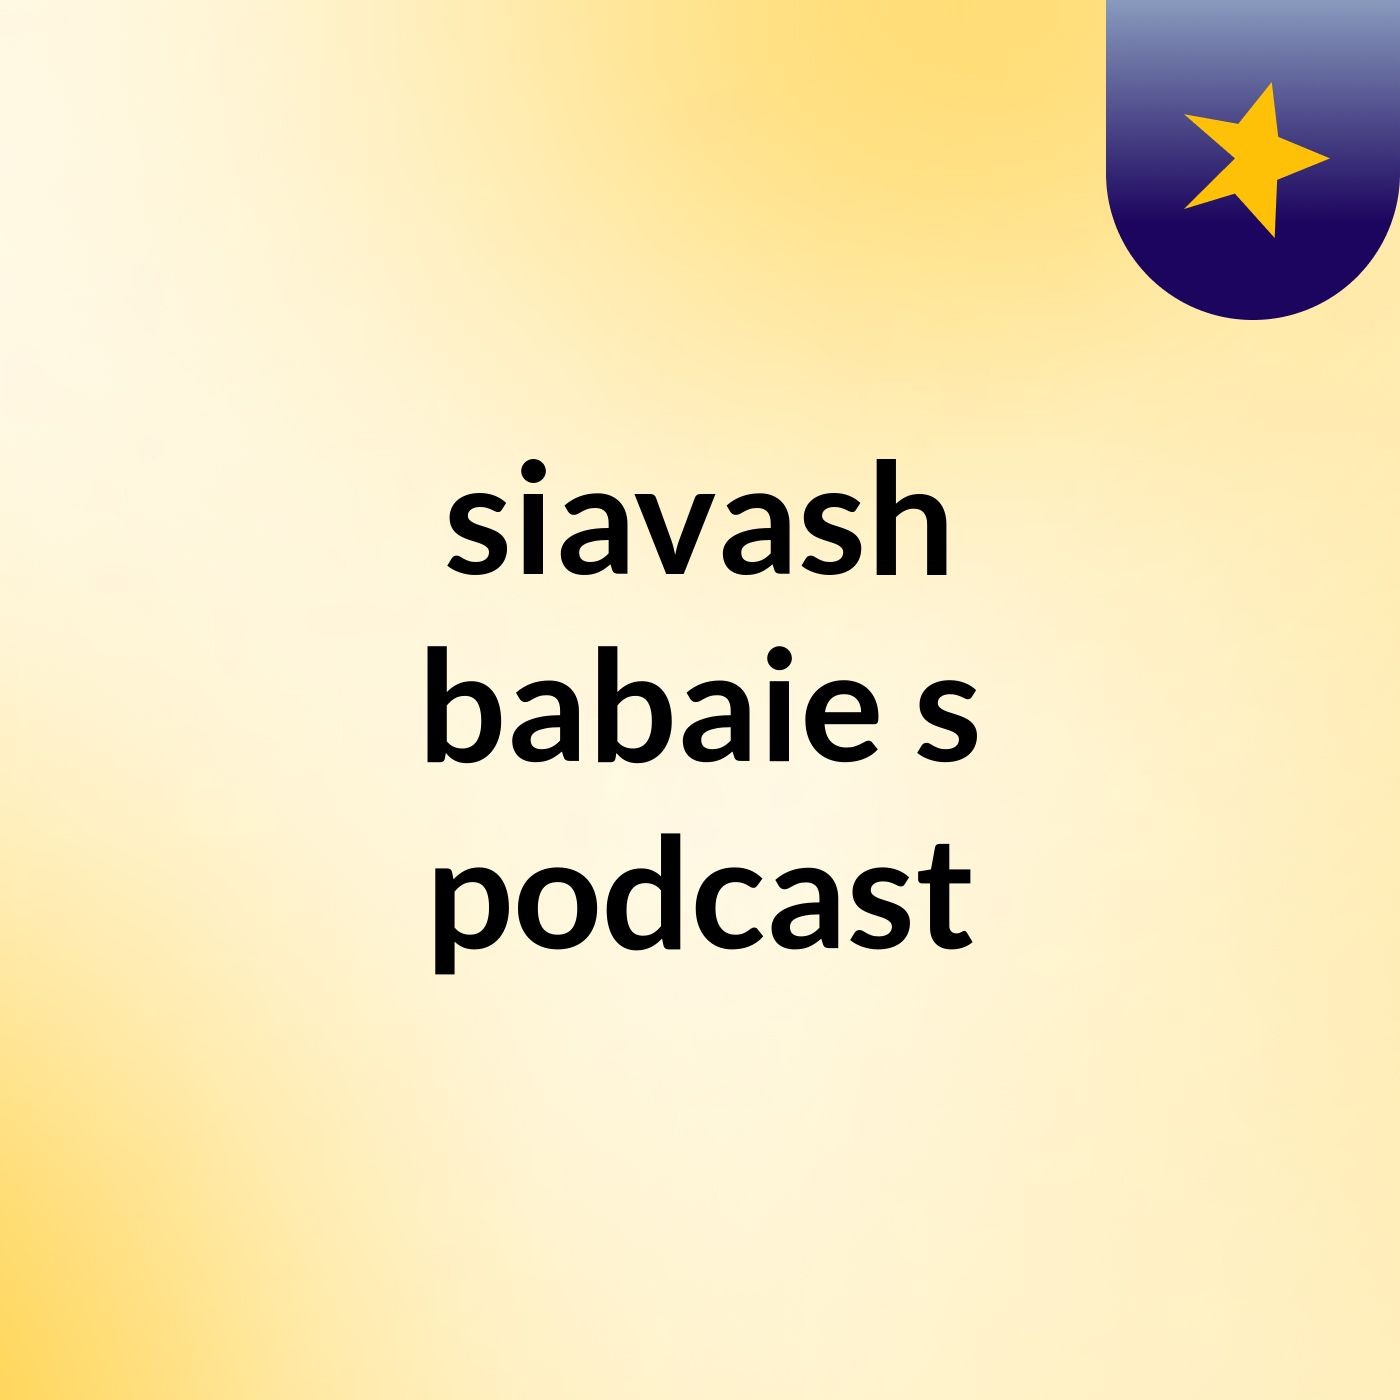 siavash babaie's podcast